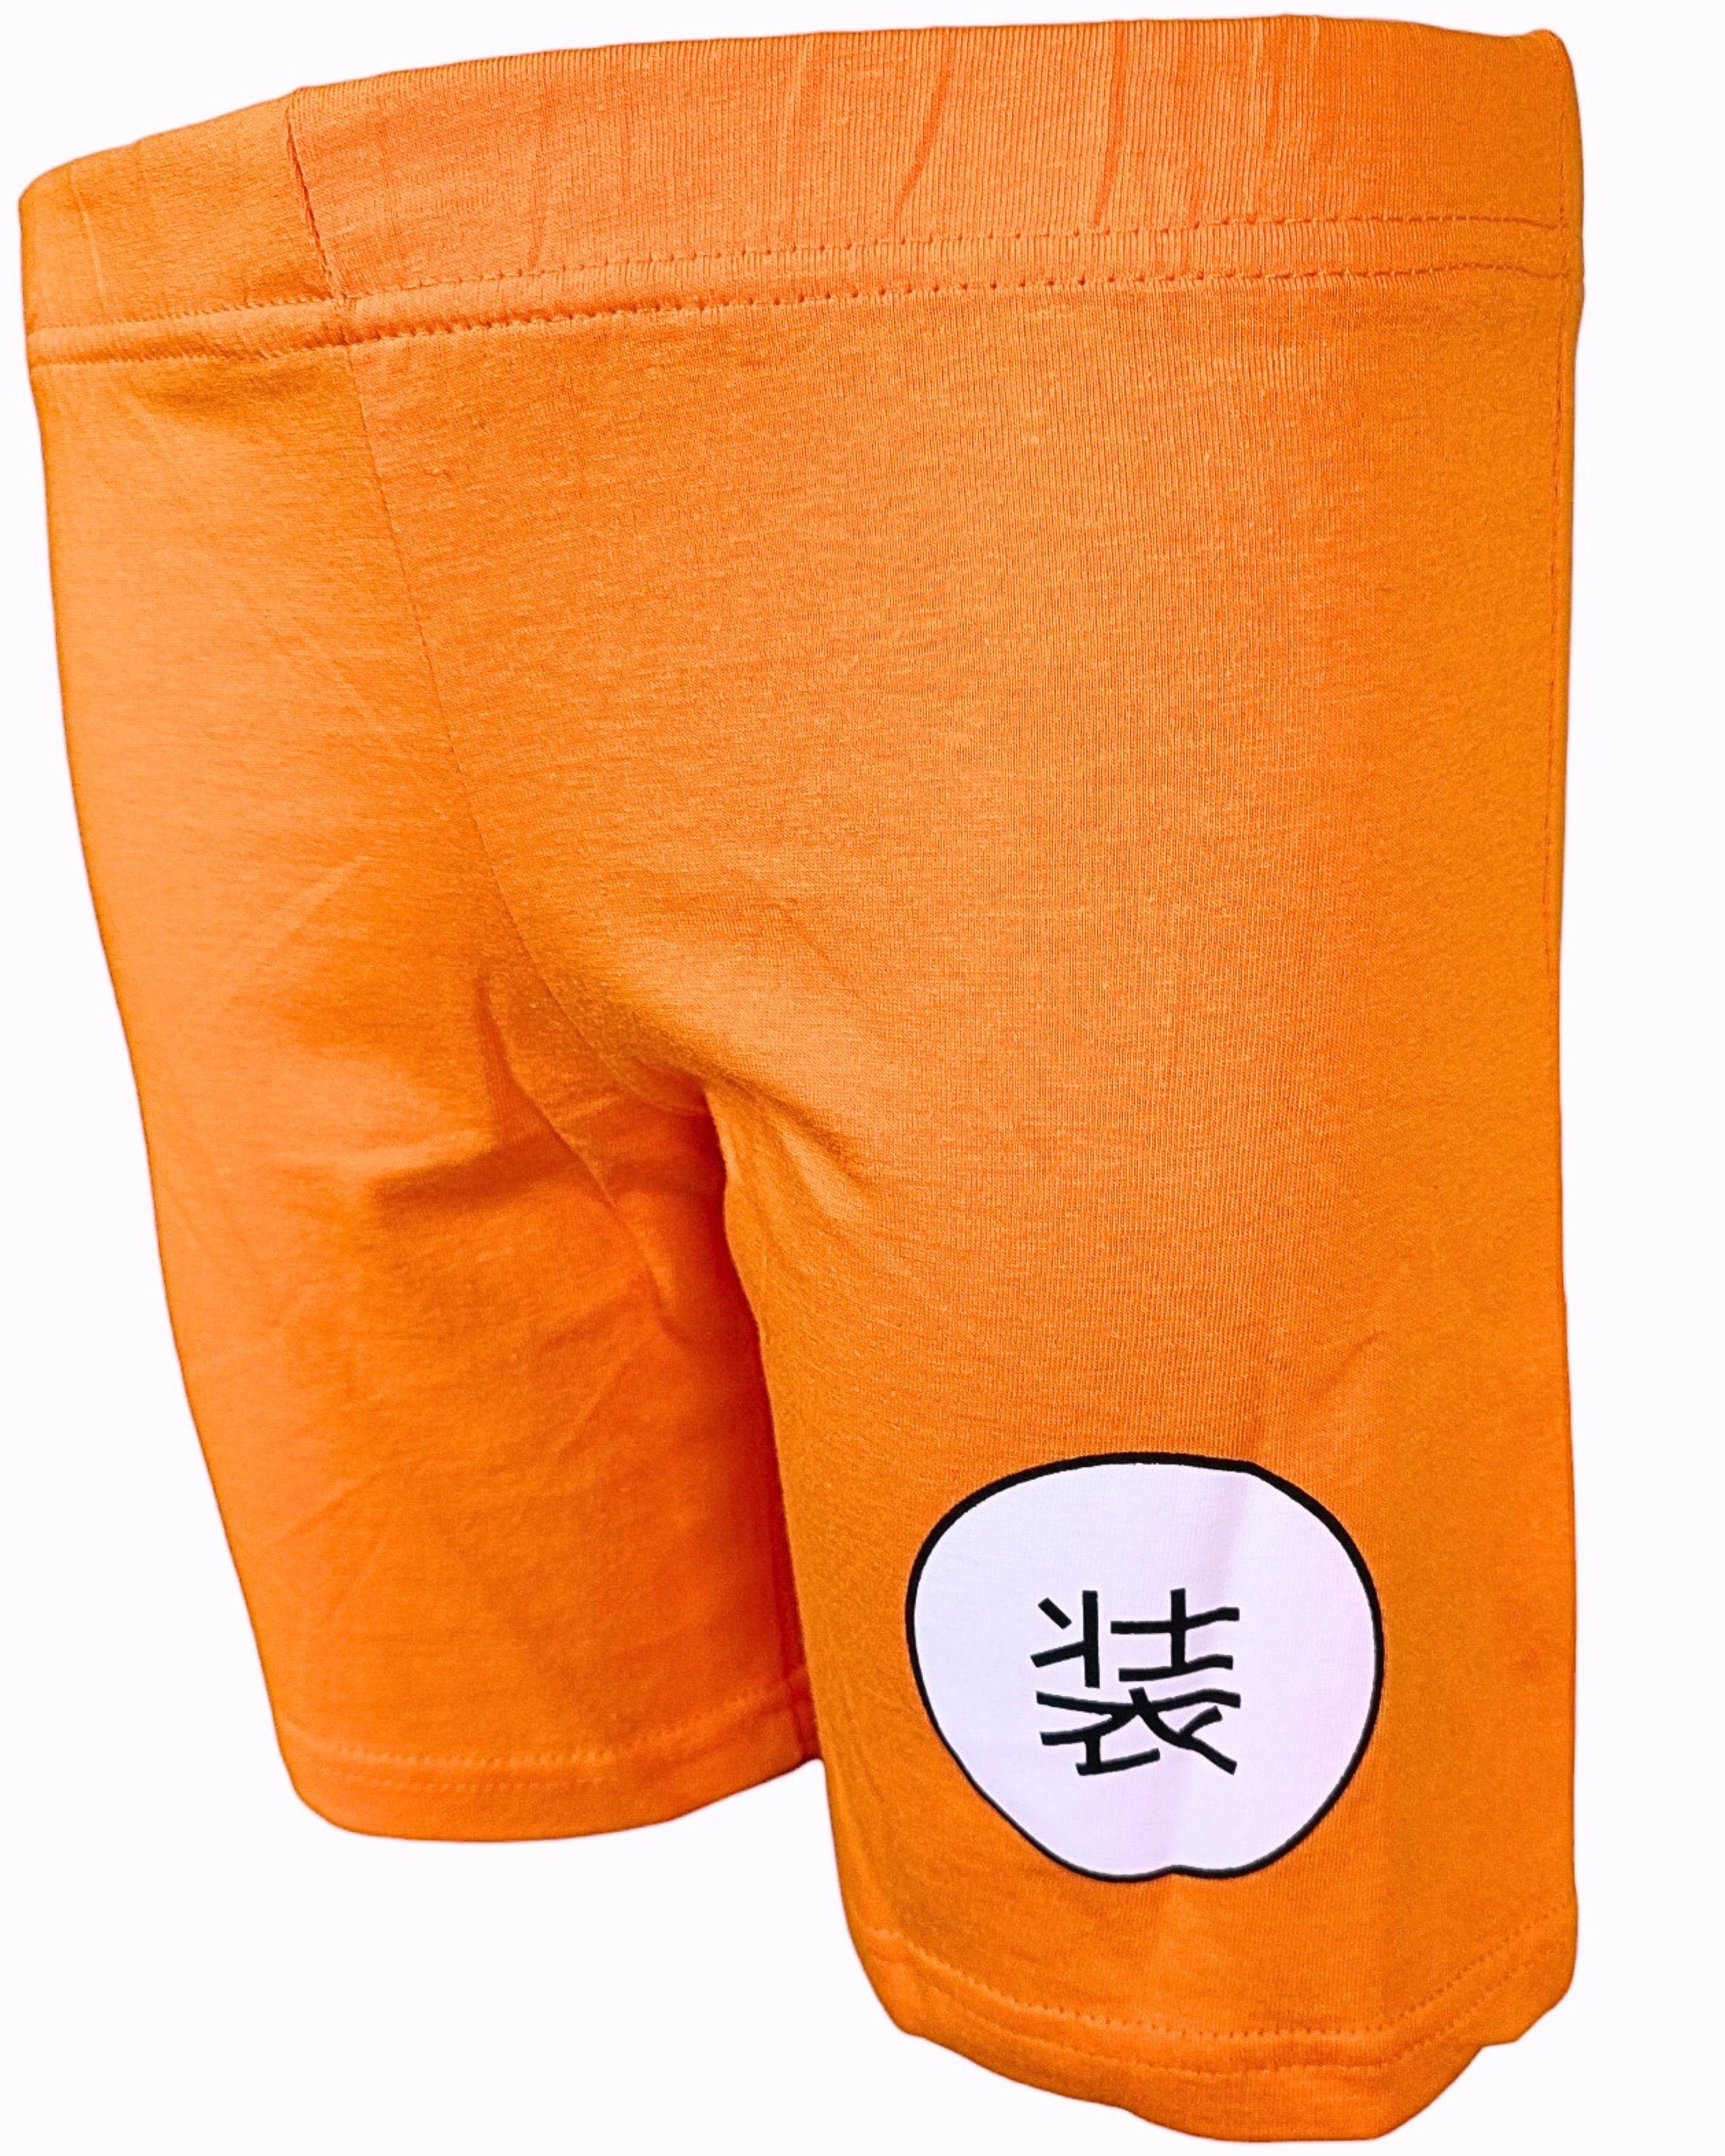 104 Gr. tlg) Pyjama Ball 140 Dragon Shorty Kinder - Jungen Schlafanzug kurz Set - cm (2